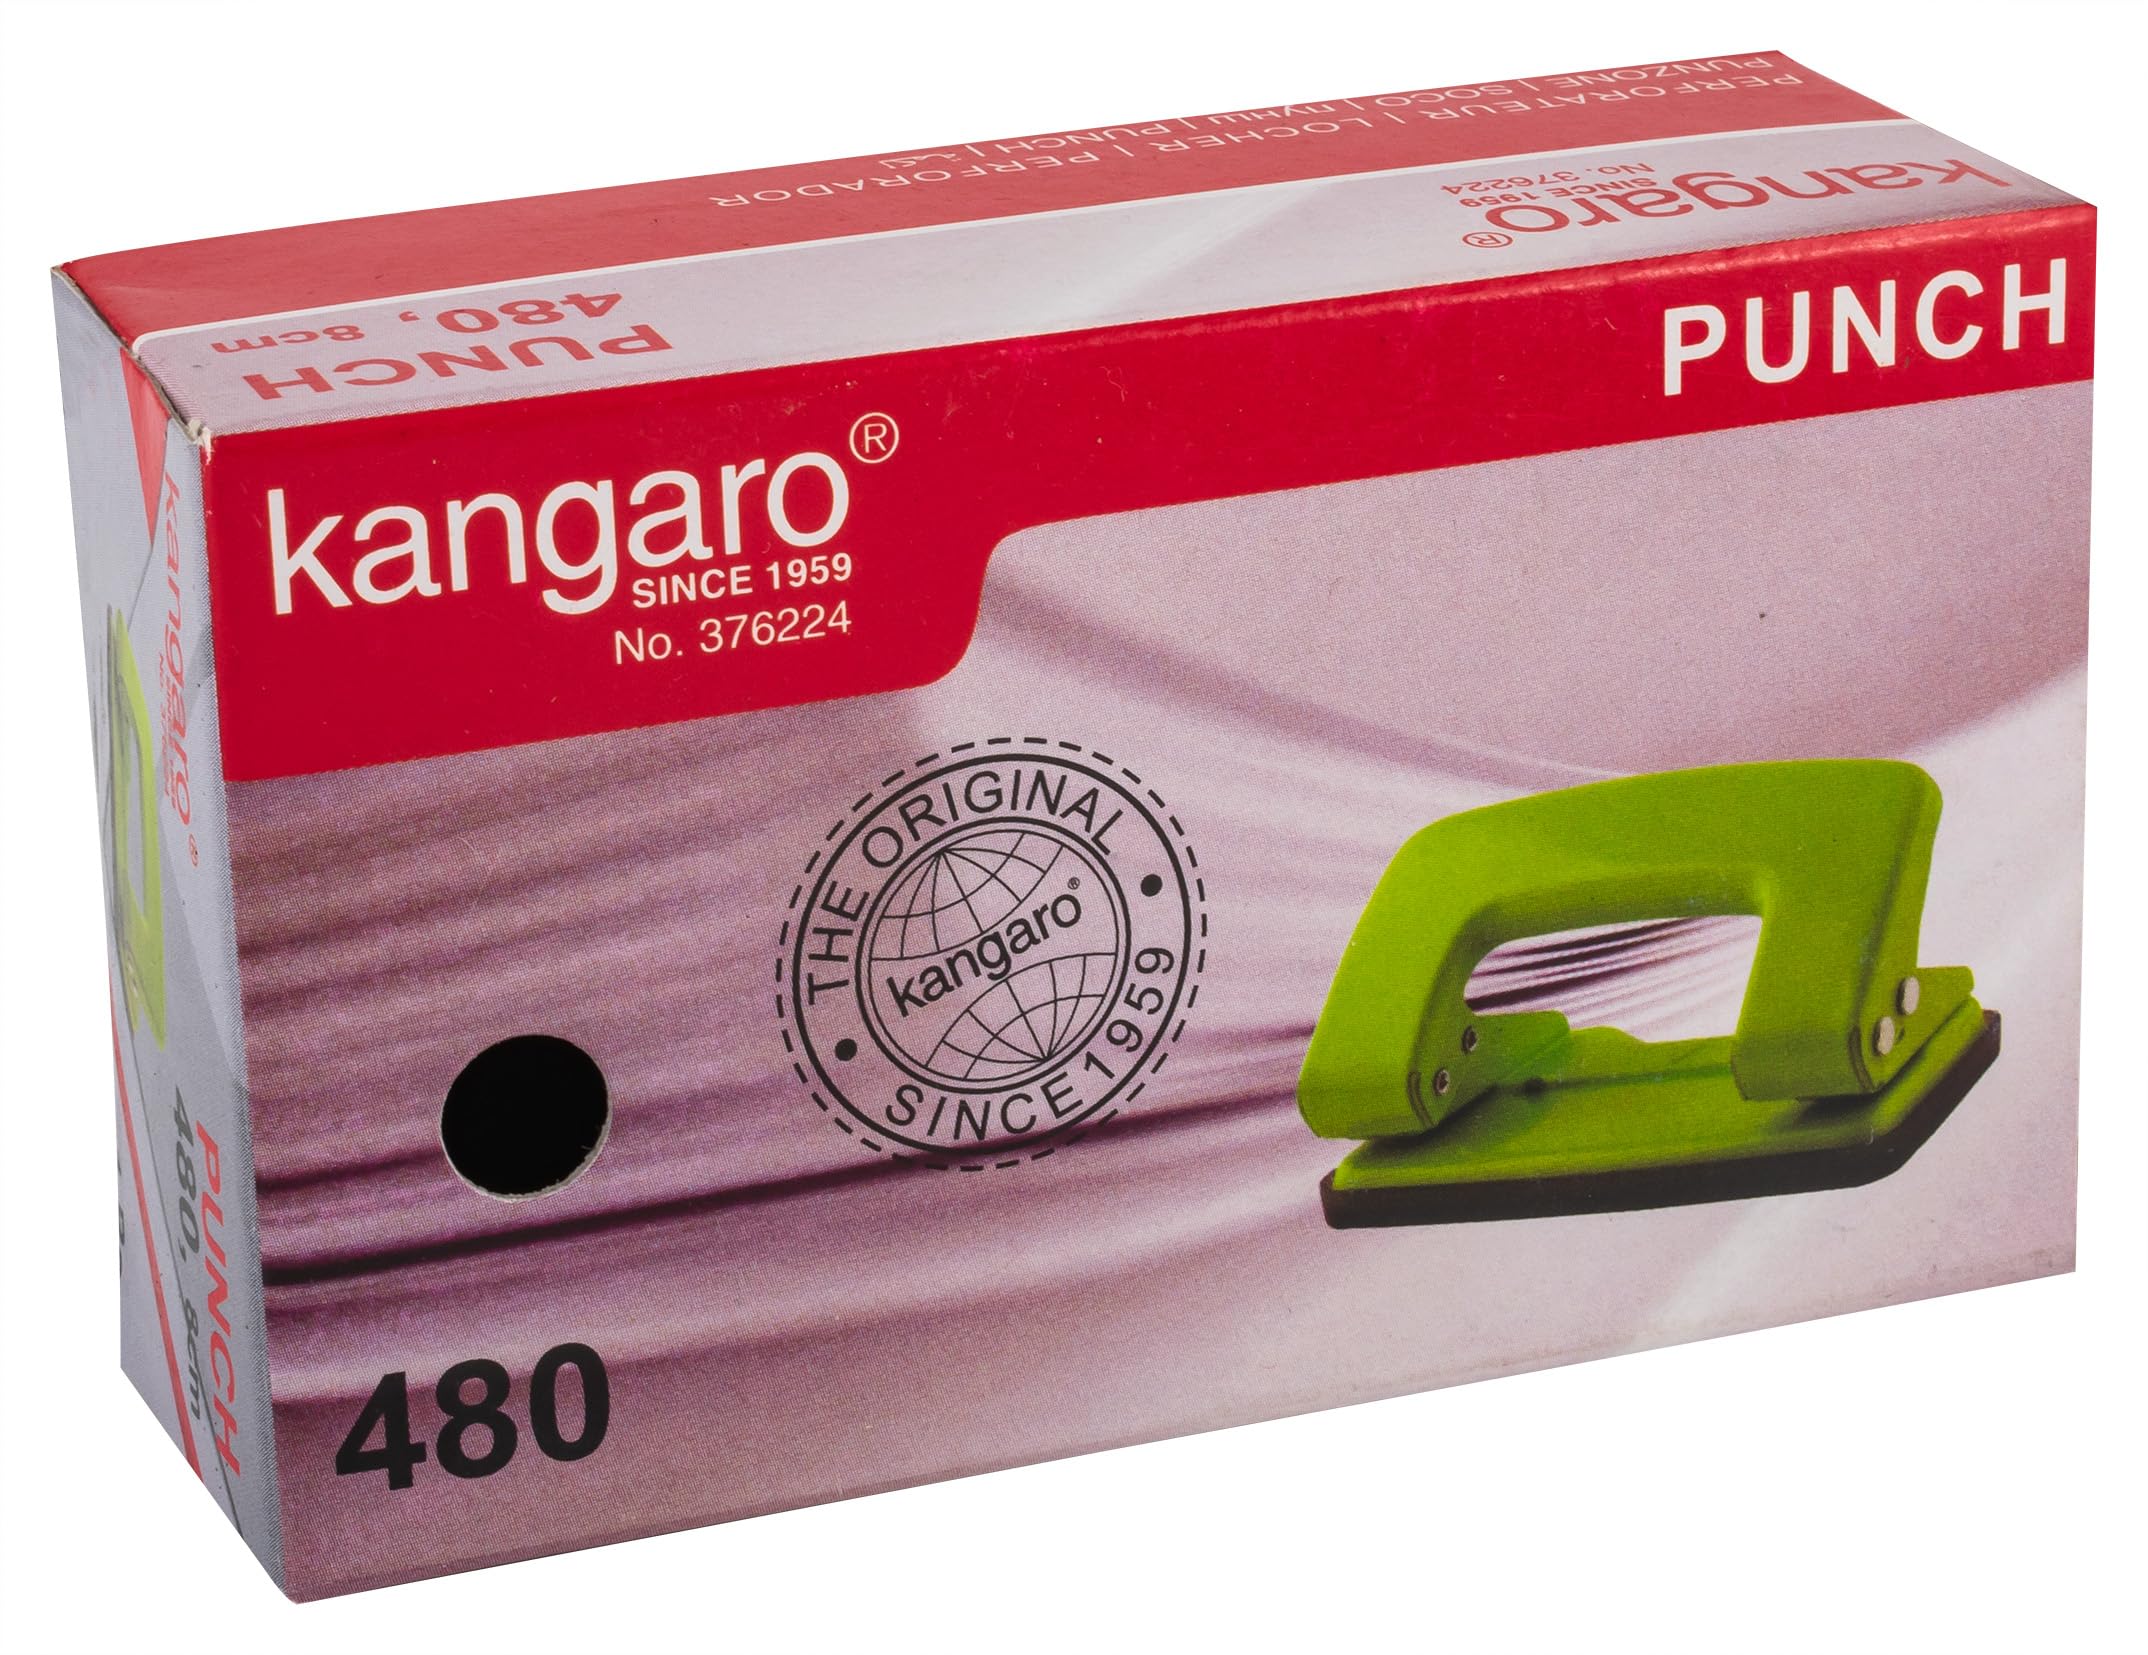 Kangaro Paper Punch 2 Hole Model 480 Punch 14 Sheet